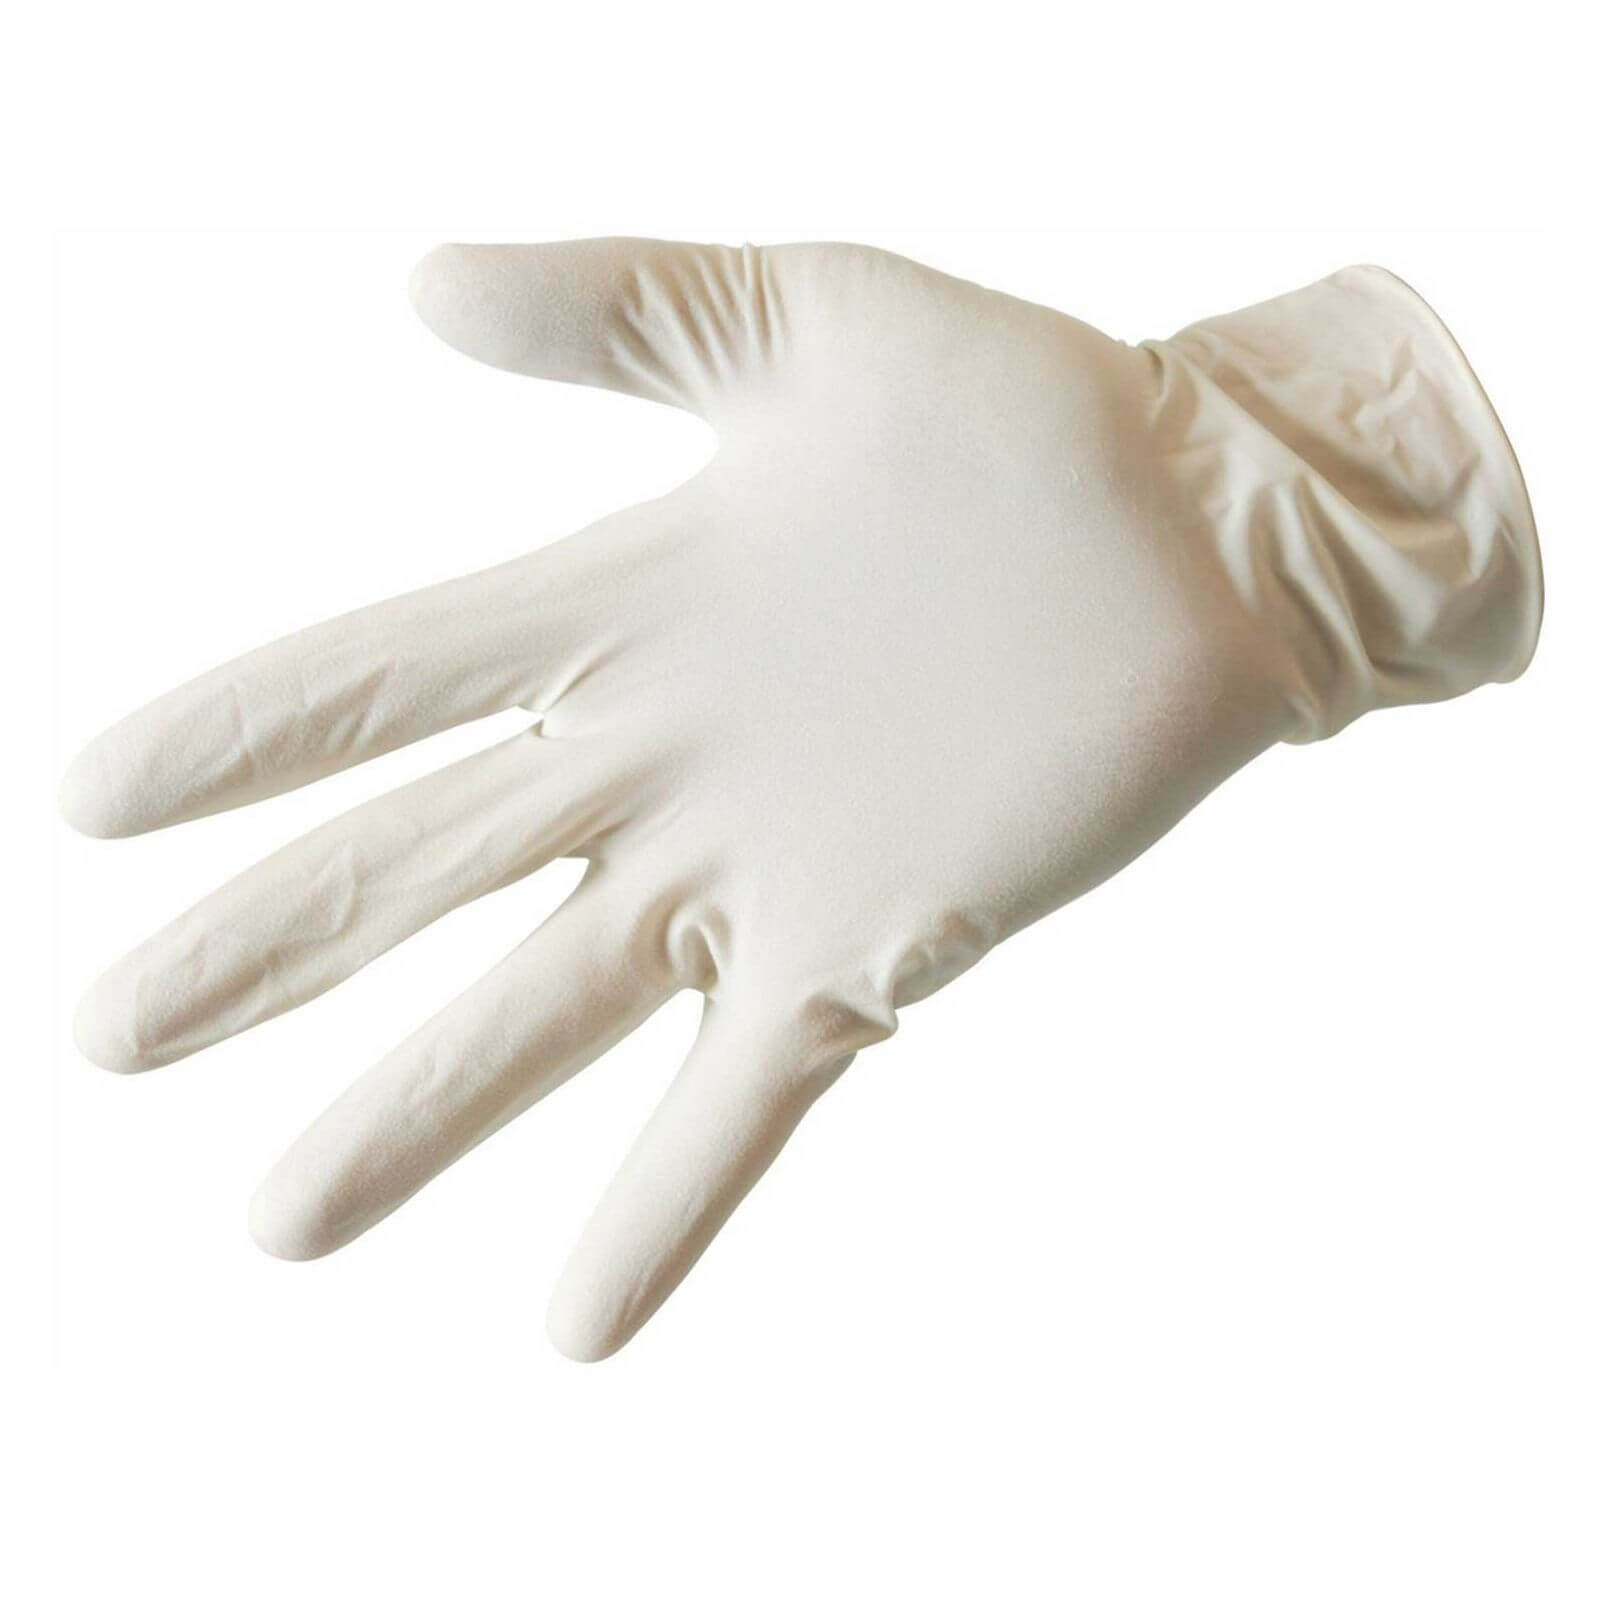 Harris Taskmasters Latex Gloves - 100 Pack